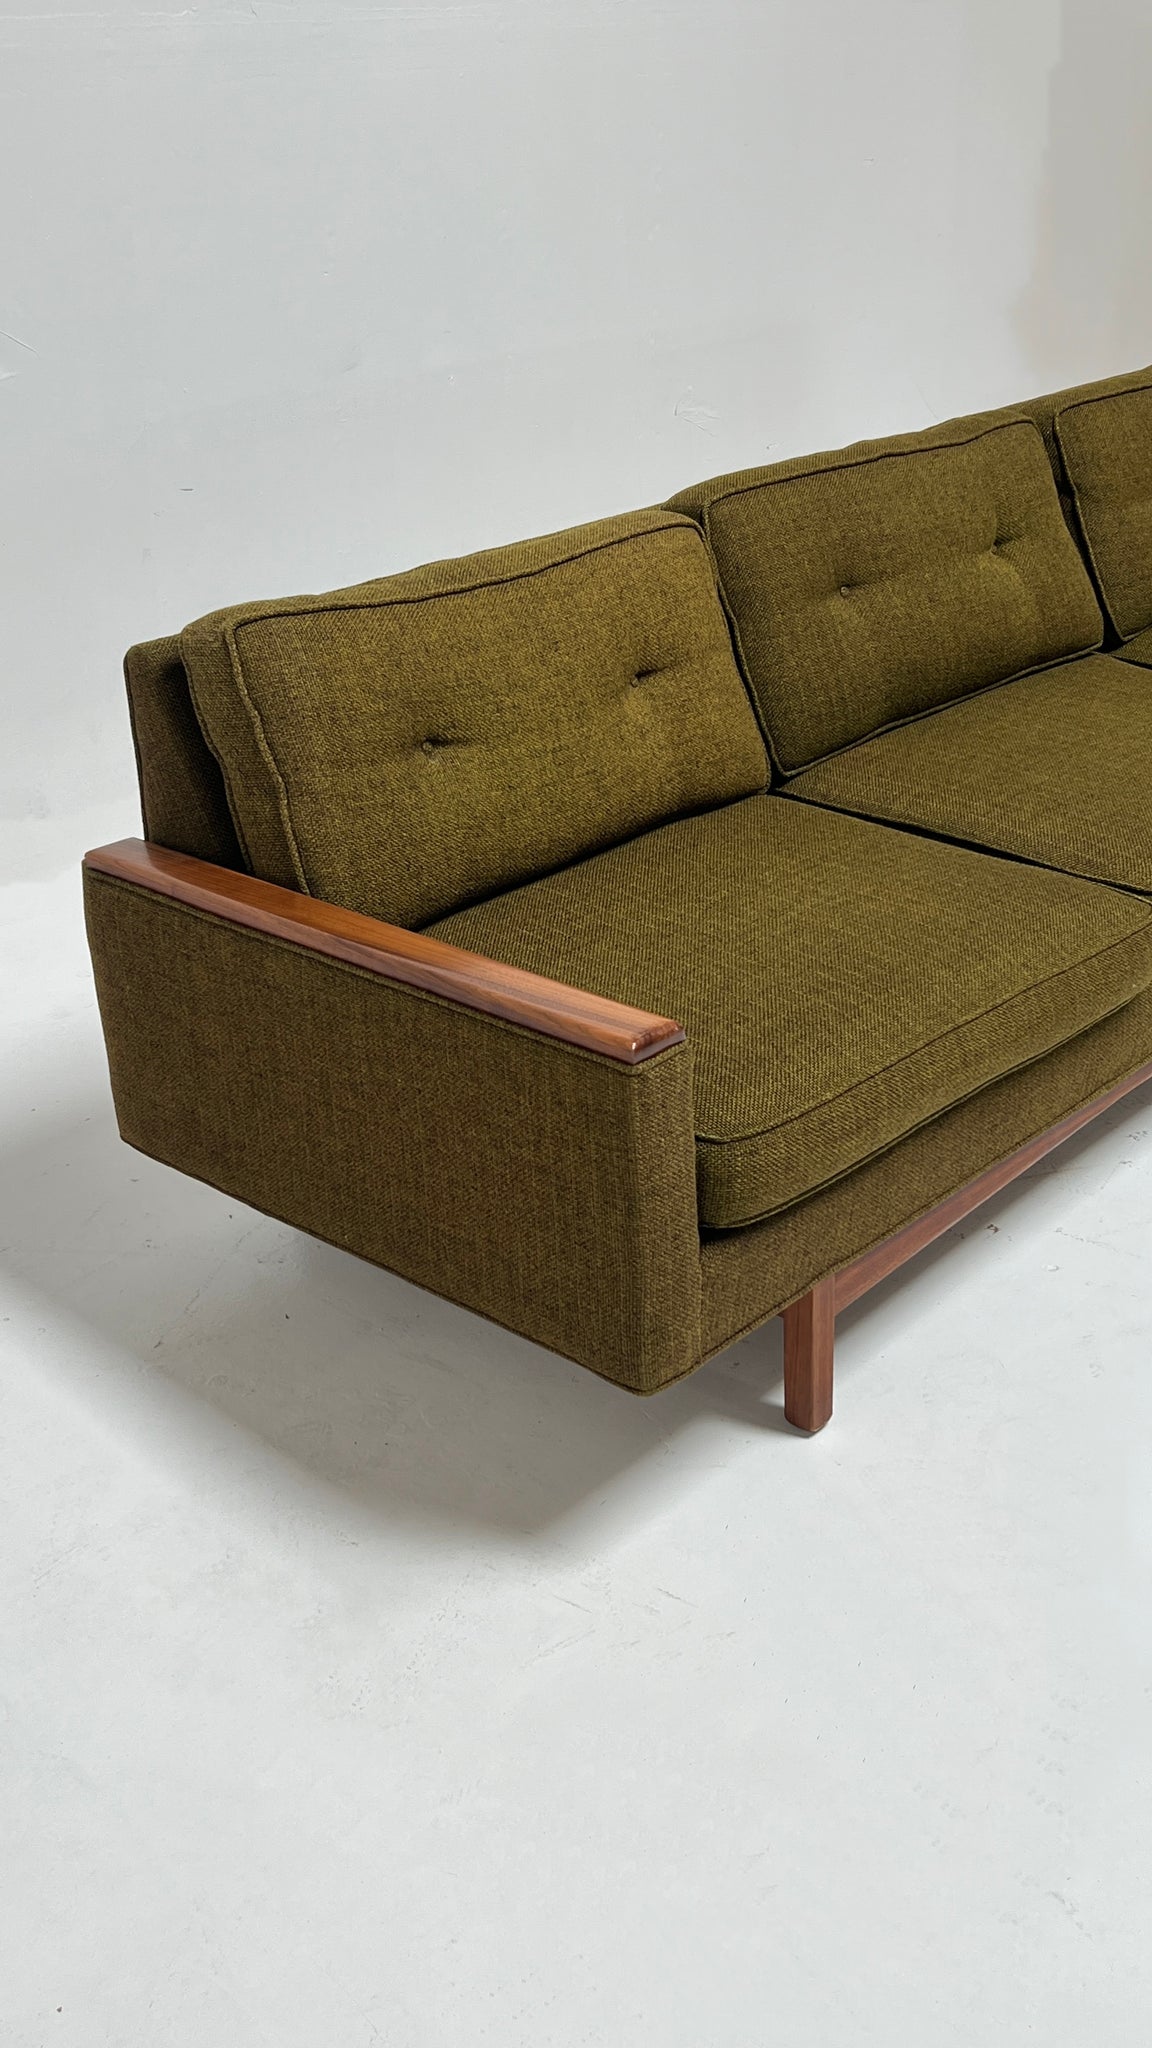 1970s Mid-Century Modern Sofa